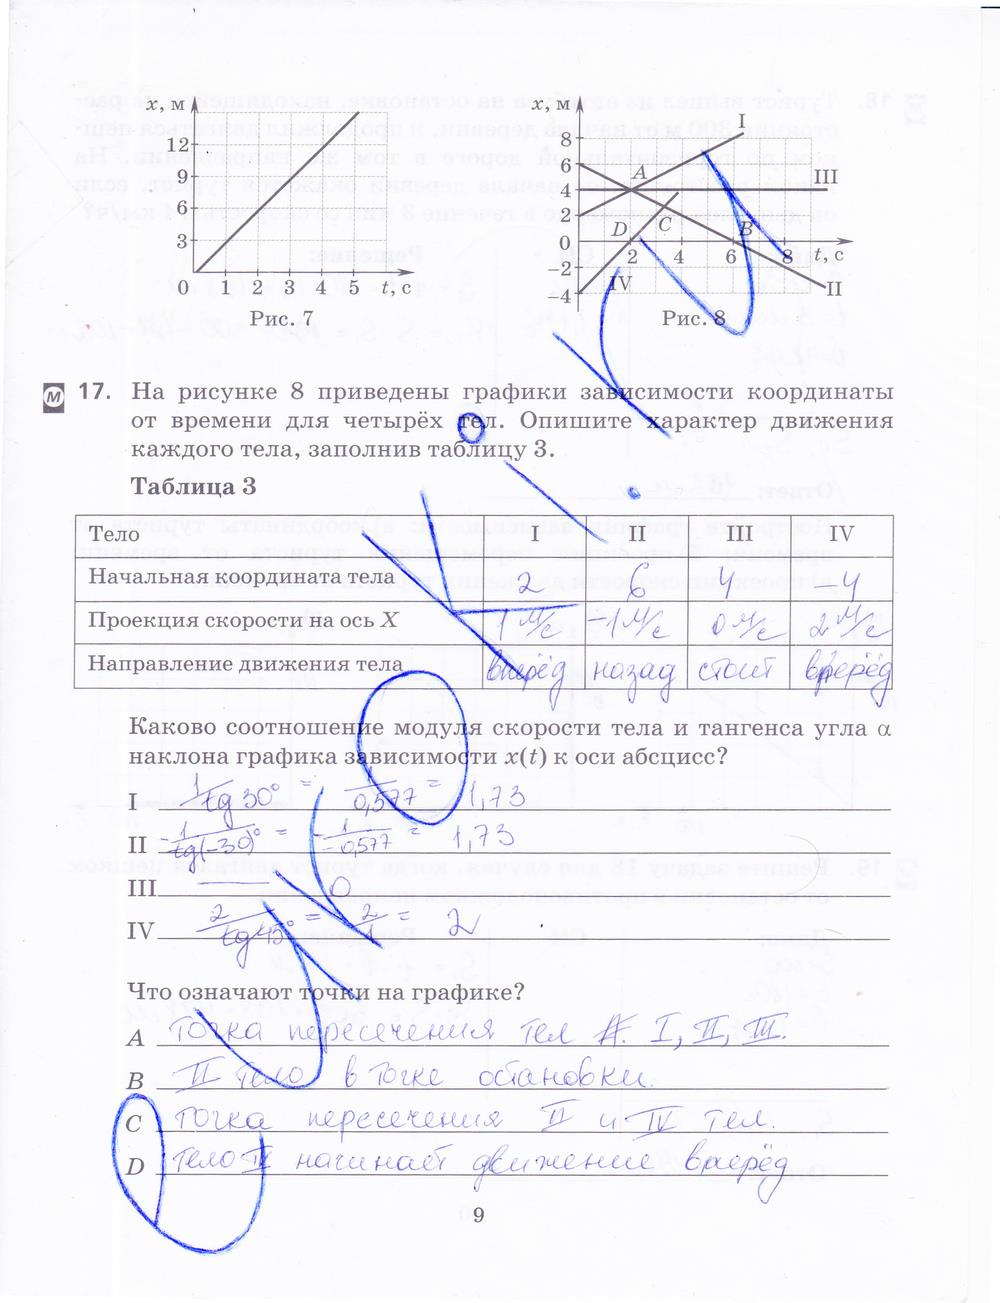 гдз 9 класс рабочая тетрадь страница 9 физика Пурышева, Важеевская, Чаругин